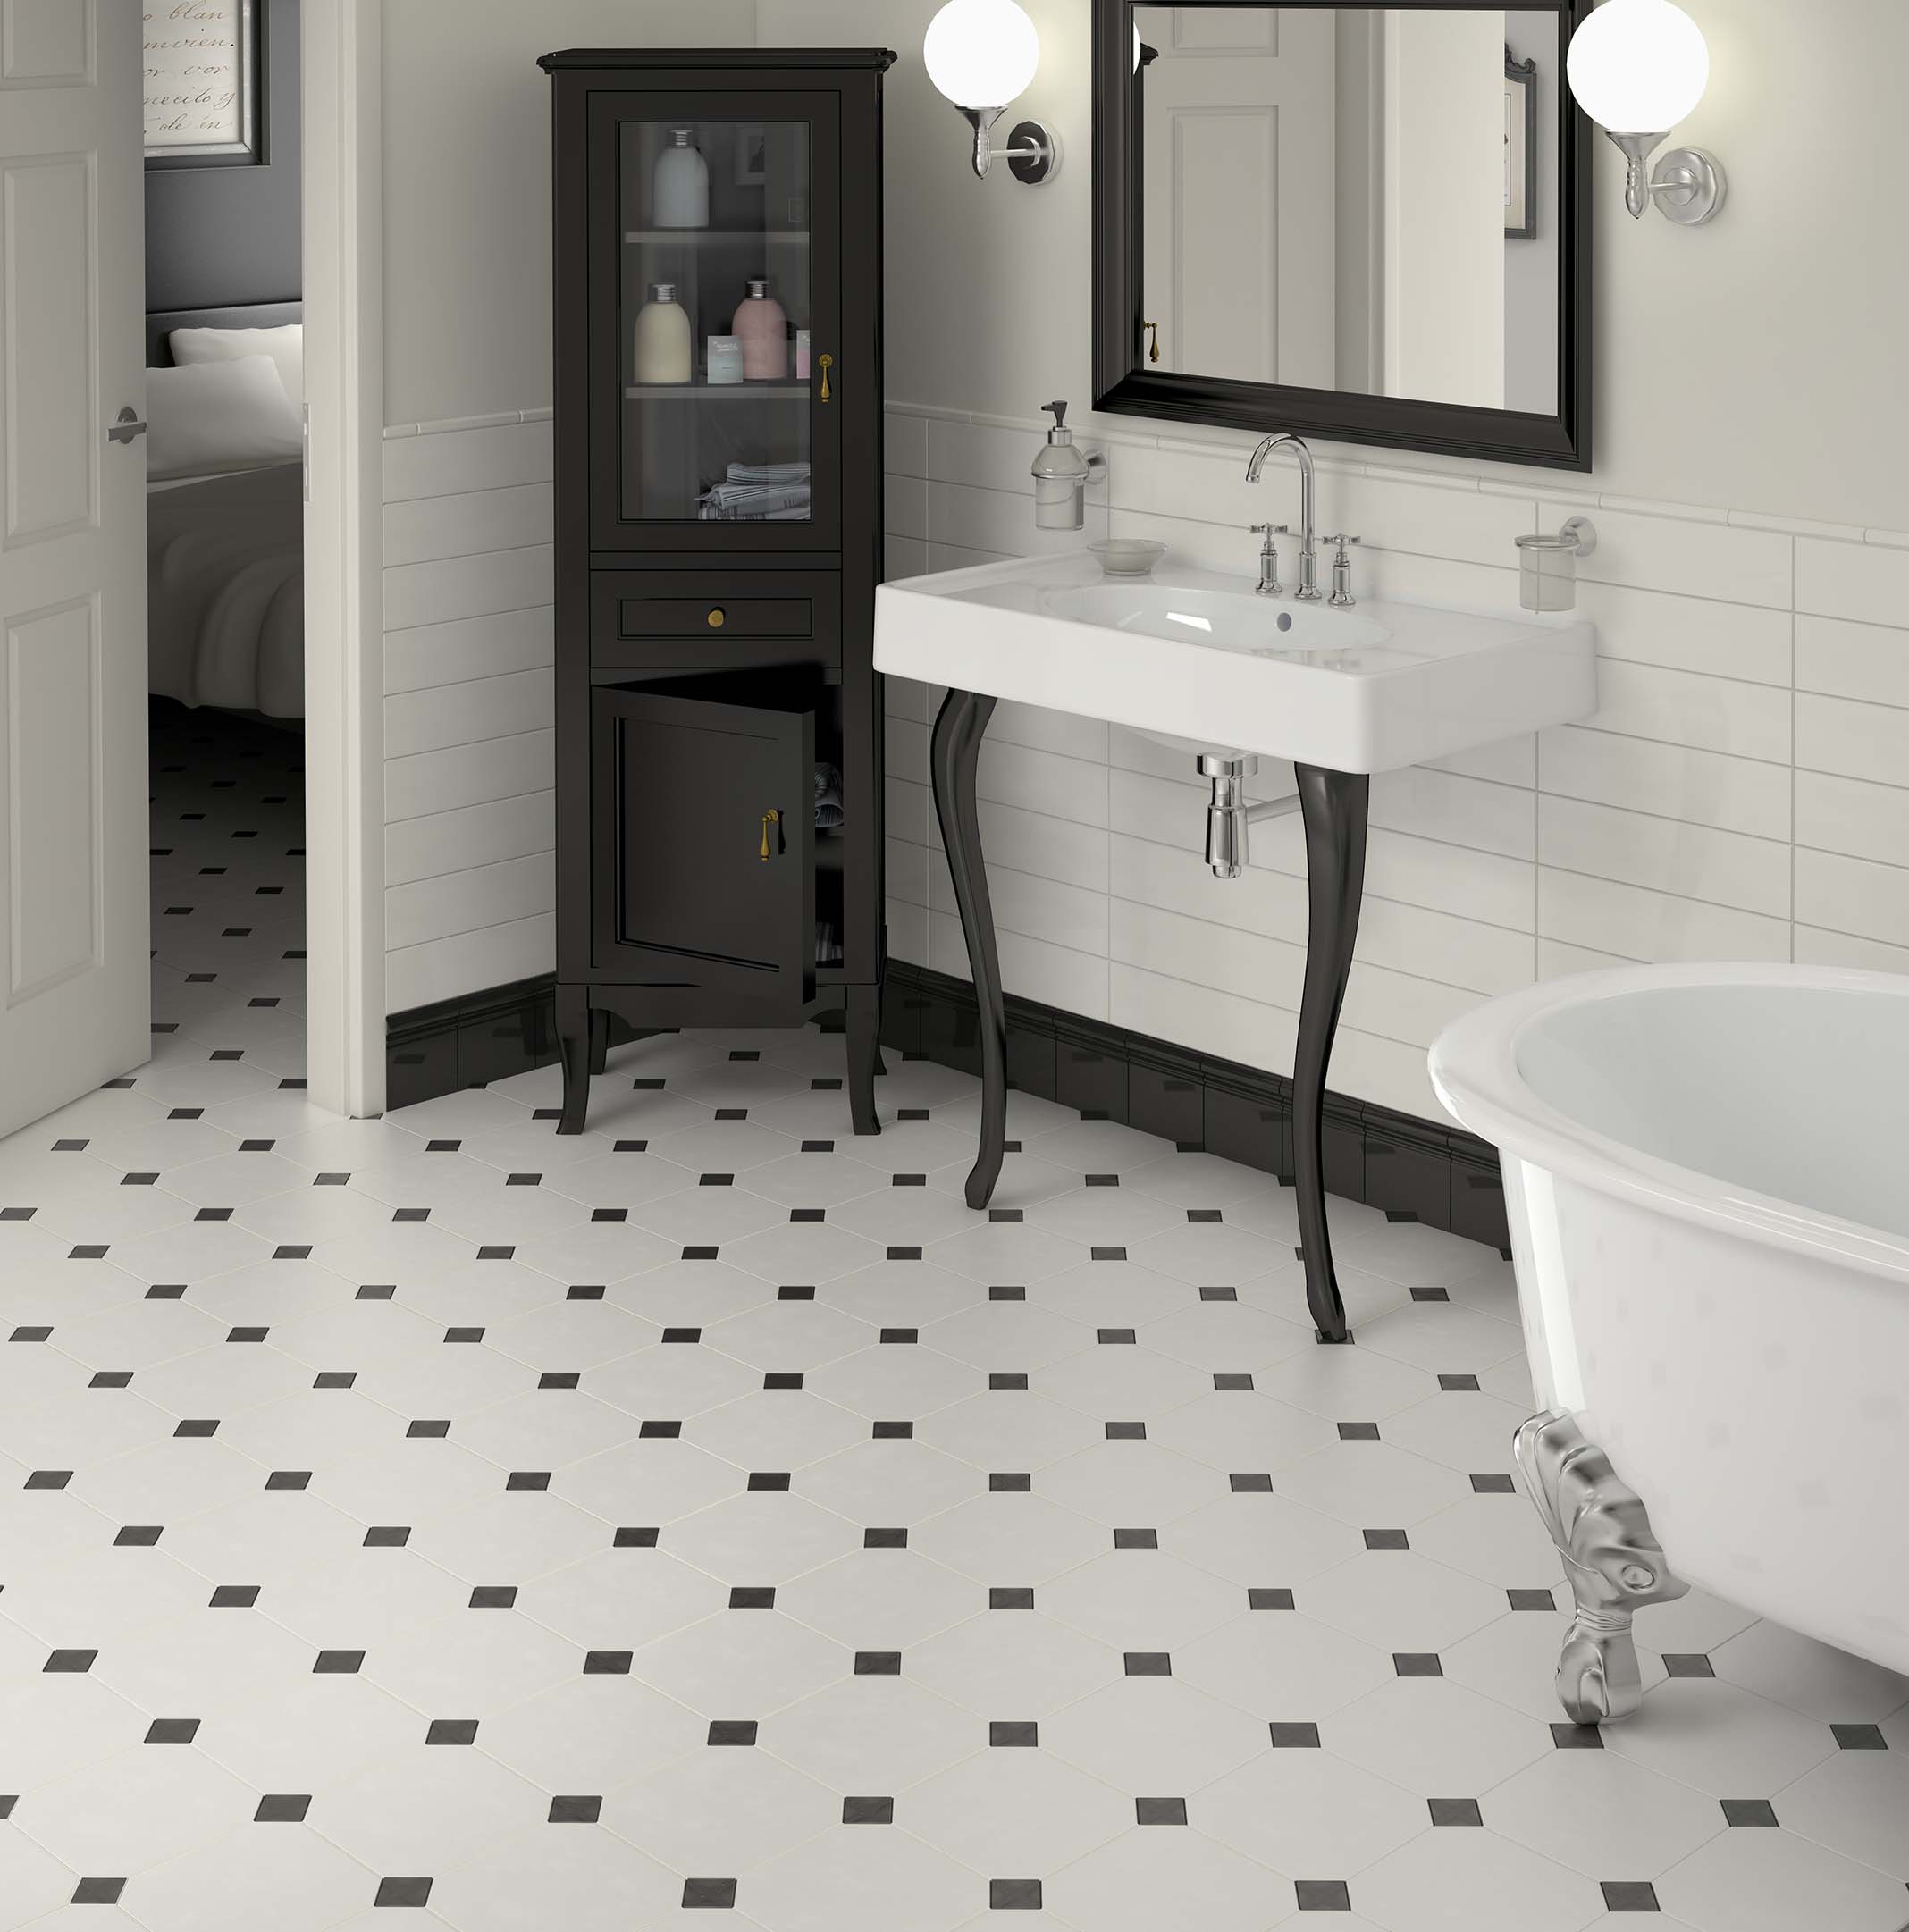 White octagonal floor tiles with black 'dot' inserts